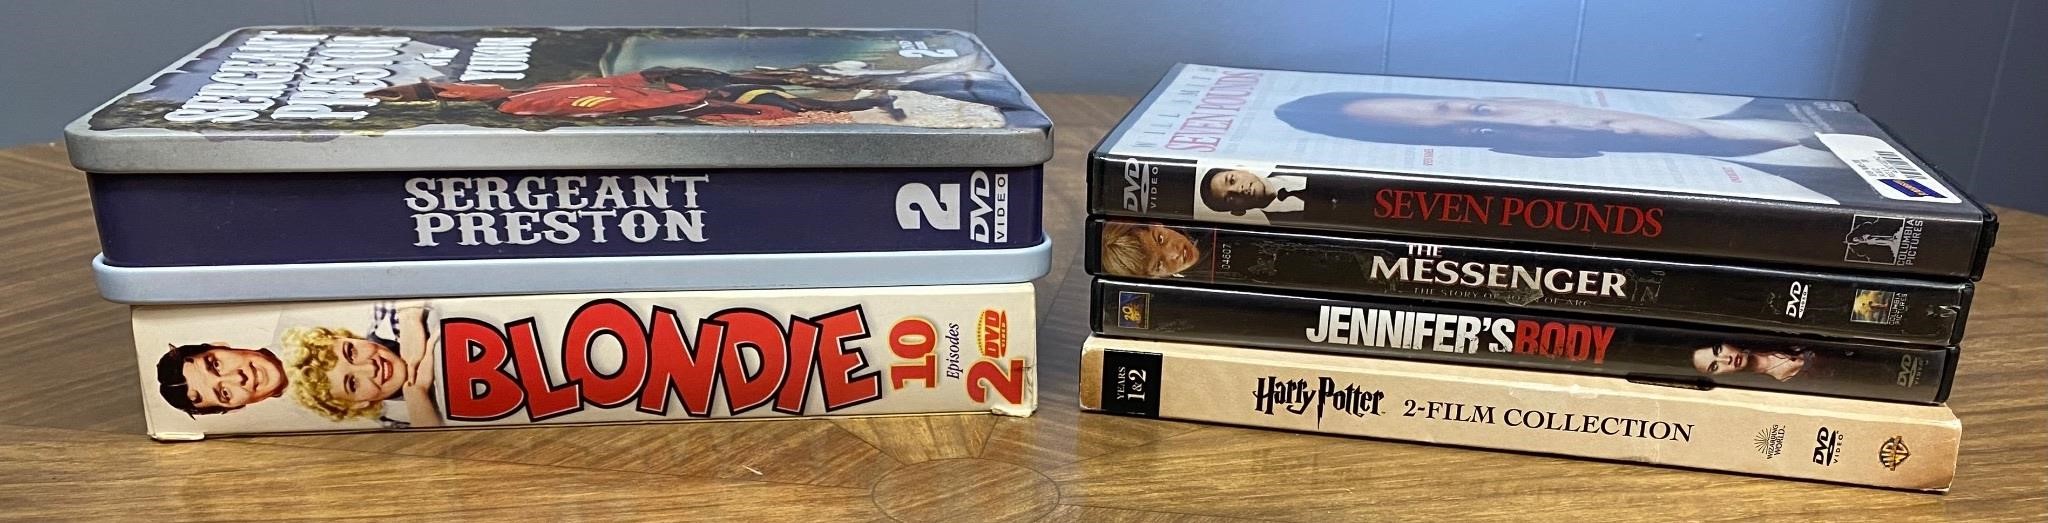 Various DVDs - Harry Potter, Blondie, SGT Preston